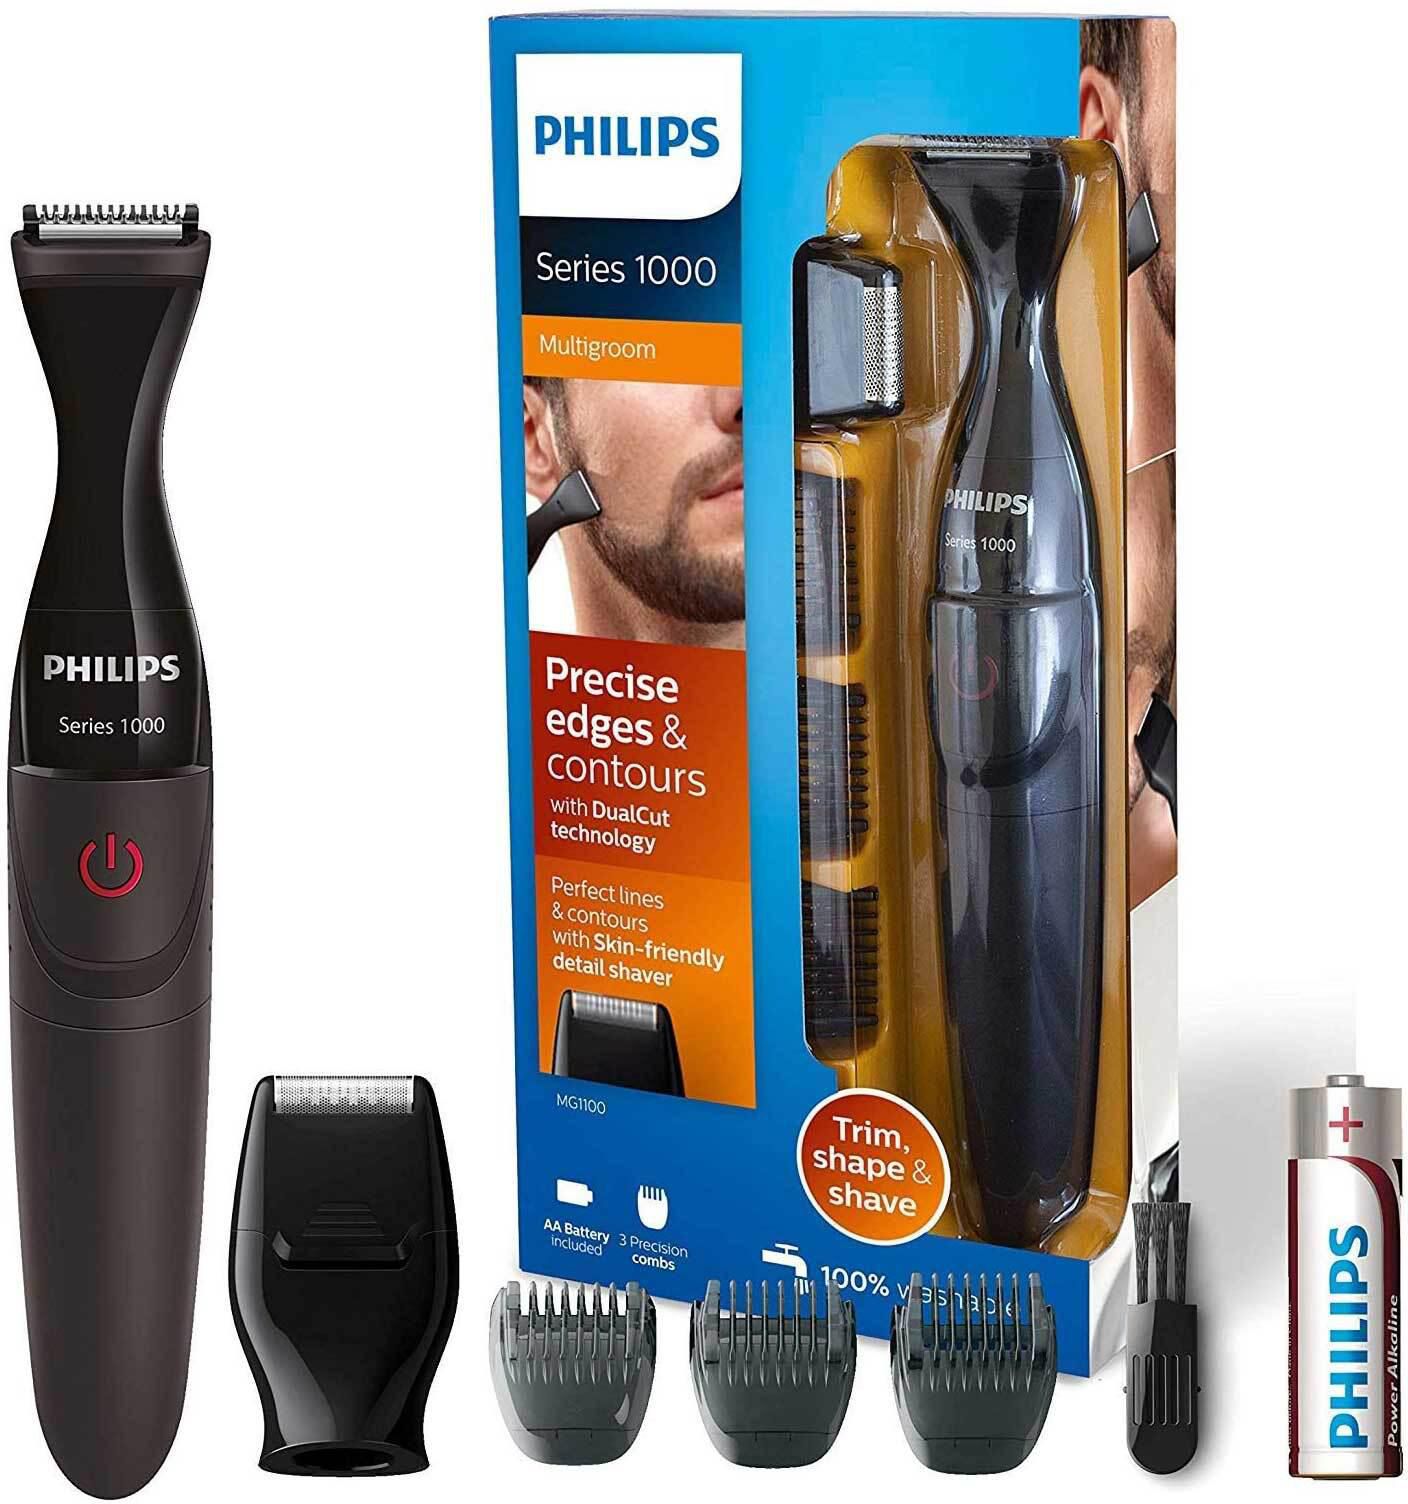 Philips facial shaver mg1100/16